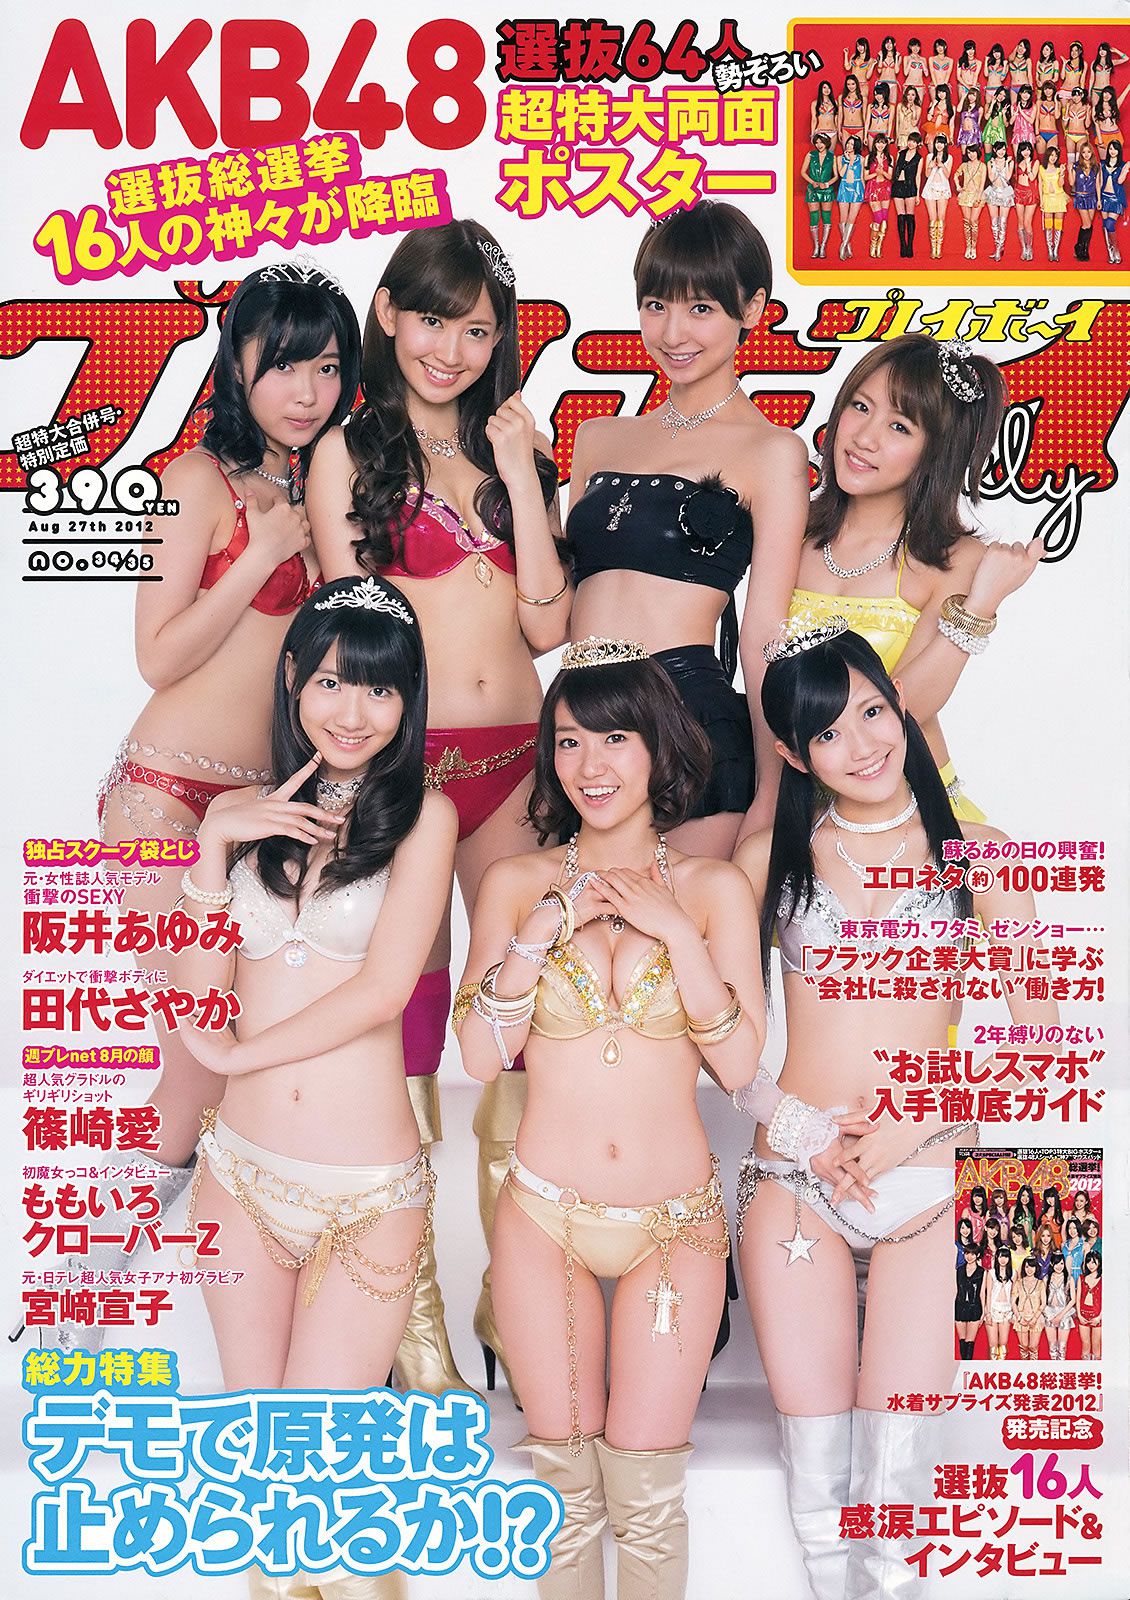 [Weekly Playboy] 2012 No.34-35 AKB48 篠崎愛 ももいろクローバーZ 田代さやか 宮﨑宣子 阪井あゆみ [32P]